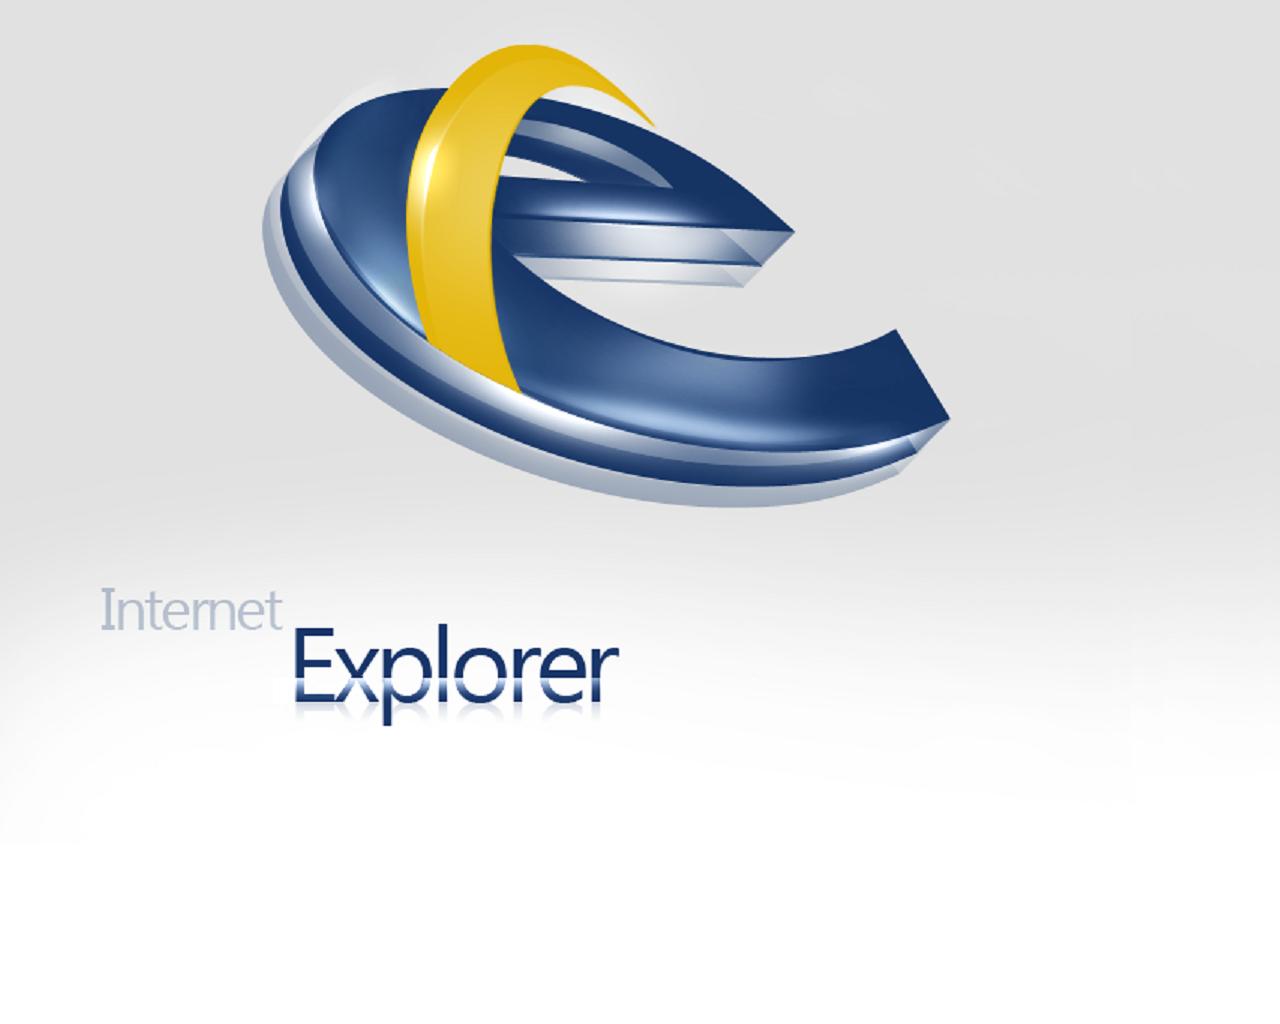 MOST POPULAR SOFTWARE - Since 1999, Internet Explorer has been the ...